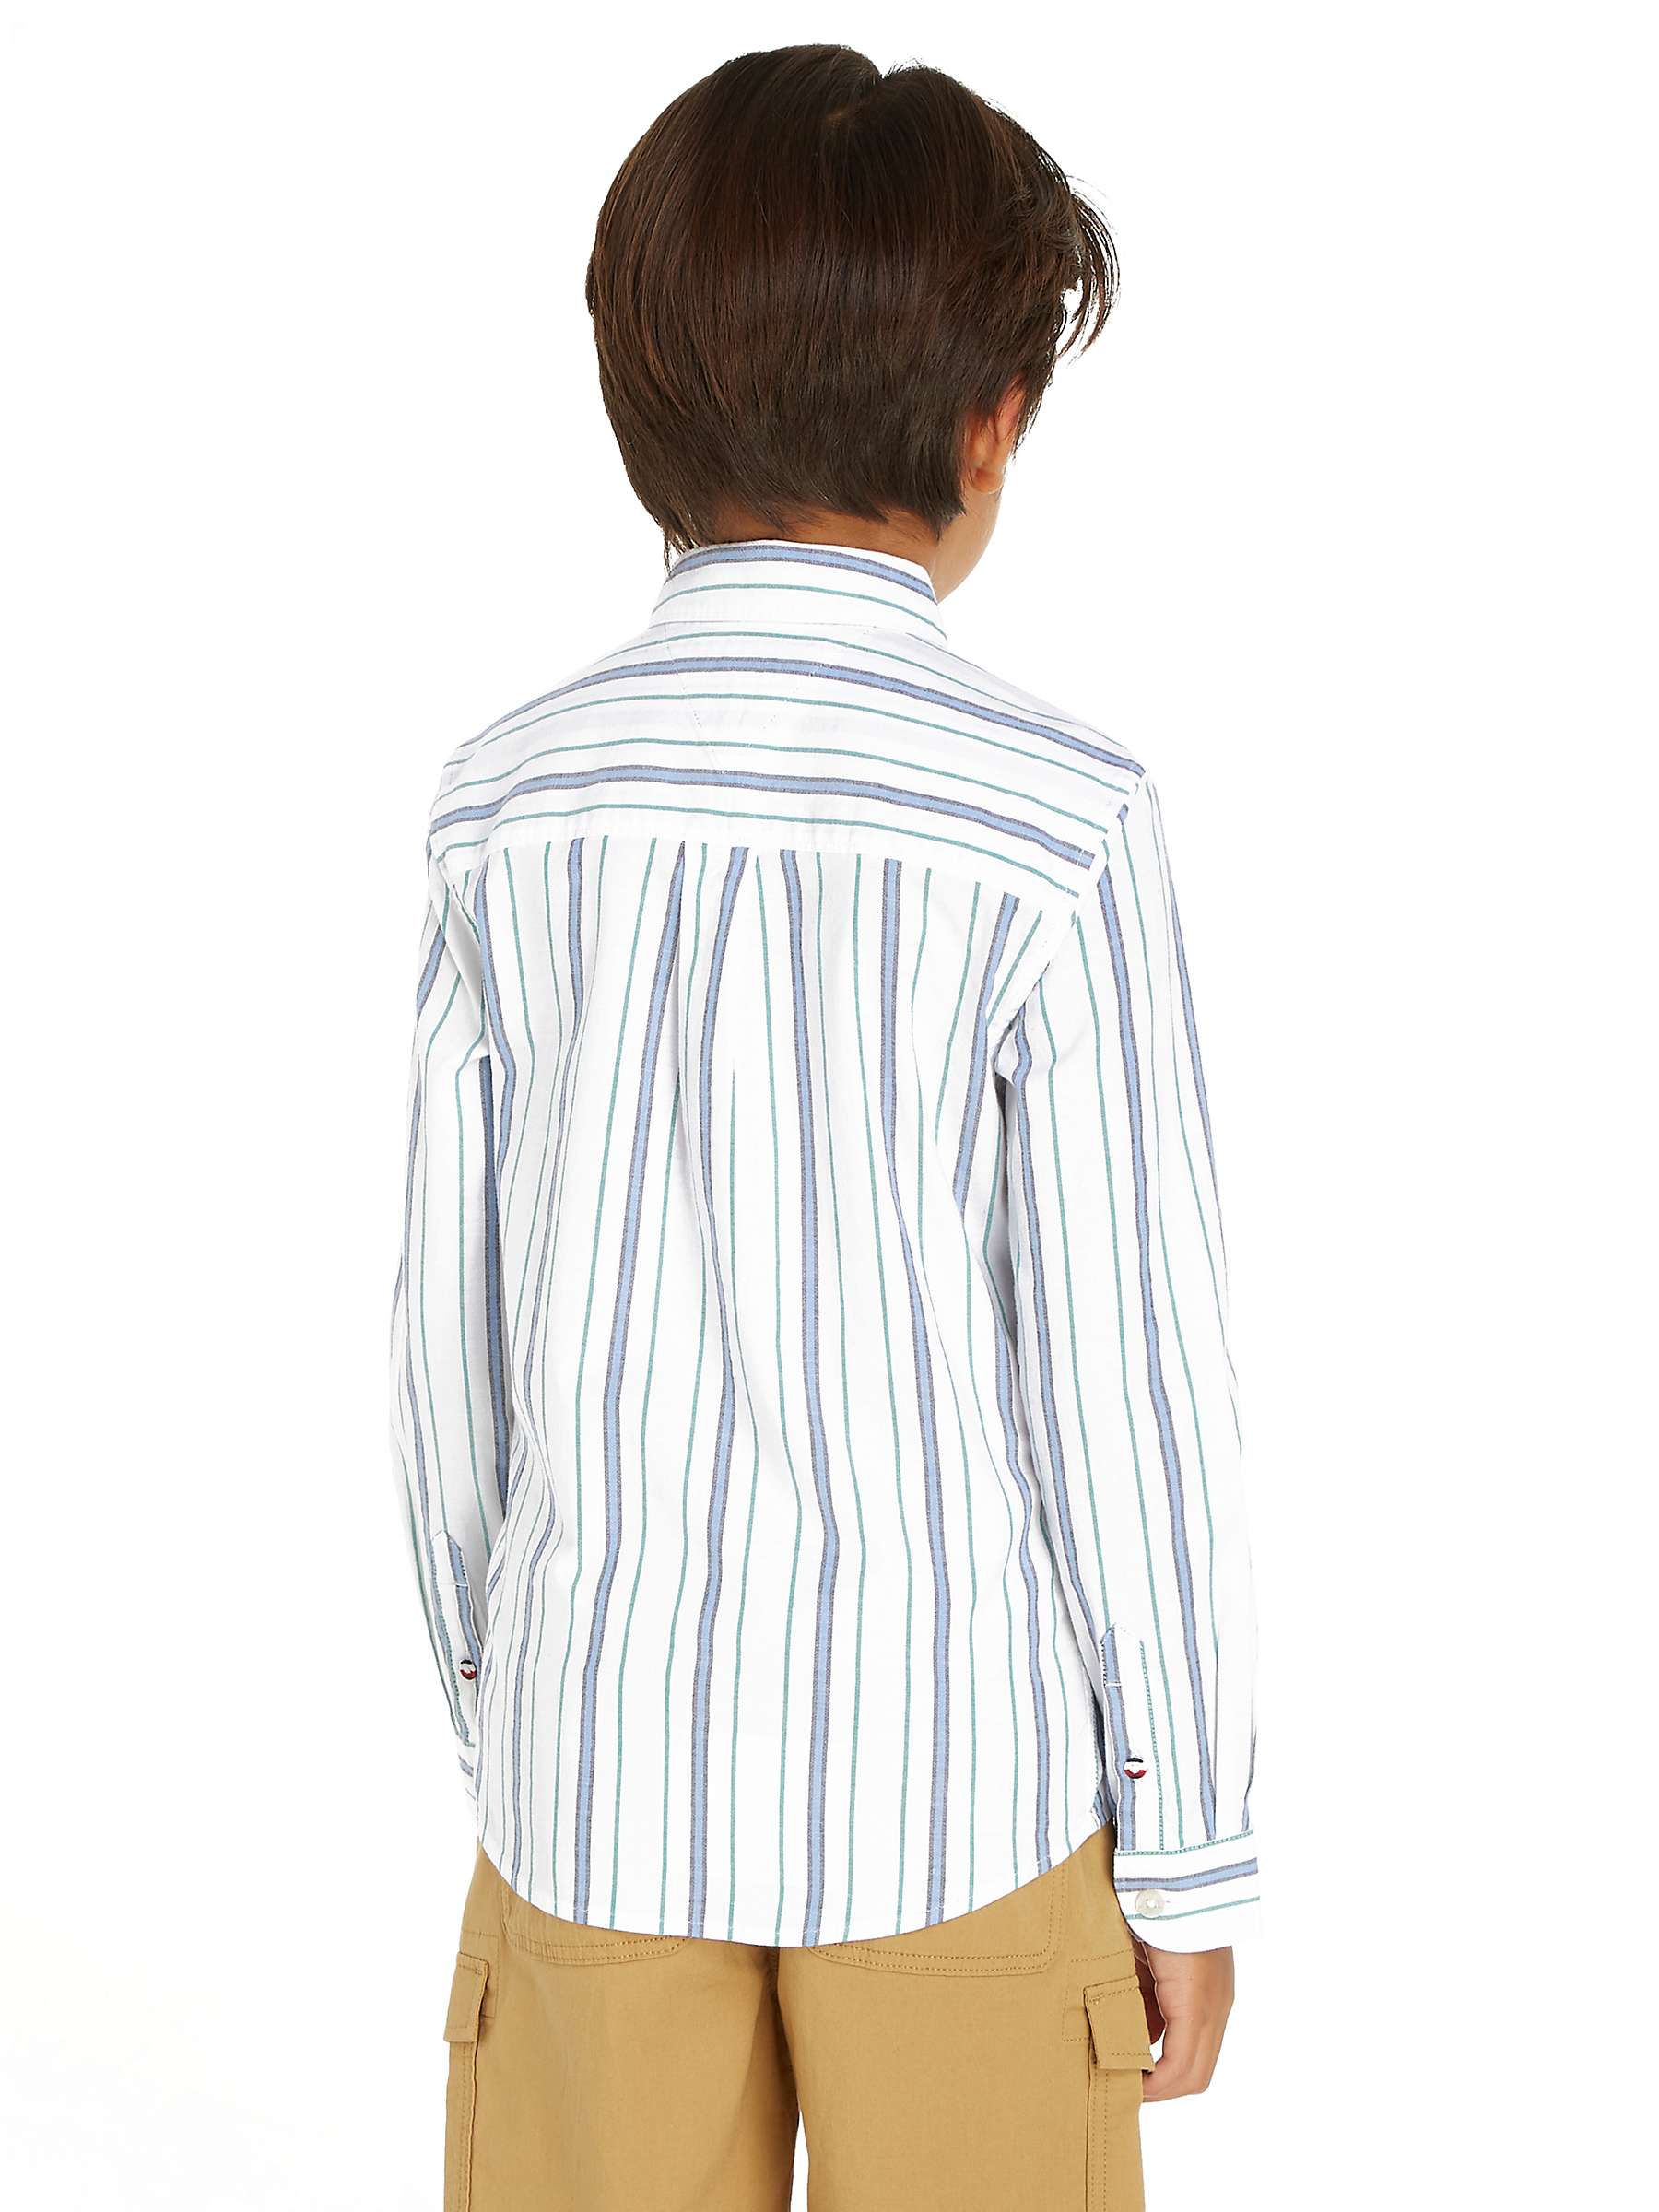 Buy Tommy Hilfiger Kids' Oxford Striped Shirt, Calico/Stripe Online at johnlewis.com